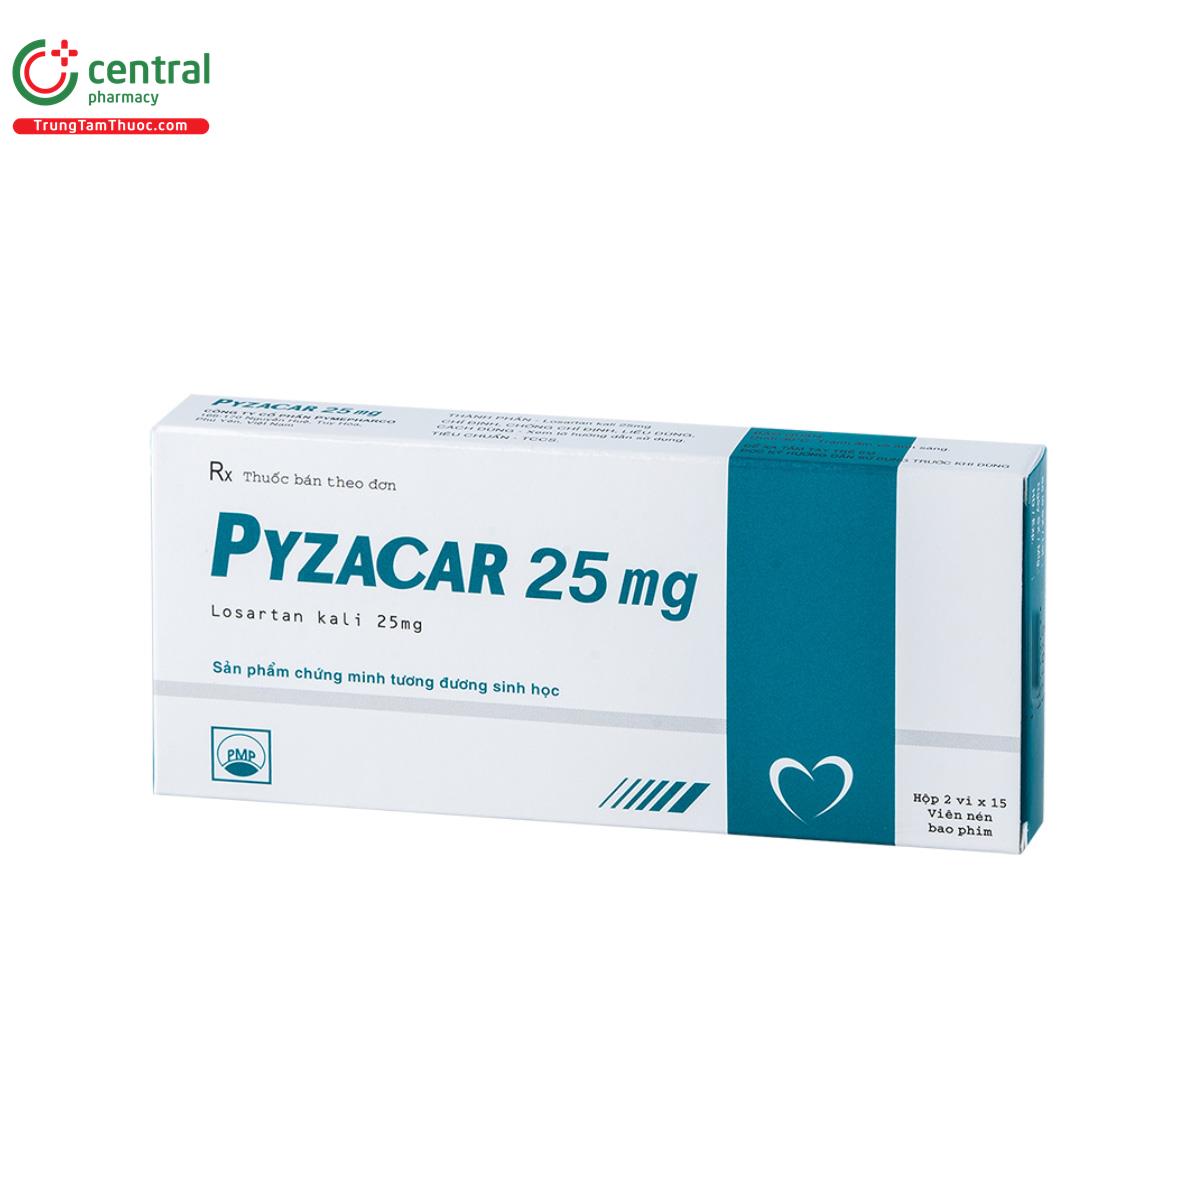 pyzacar 25mg 5 J3503